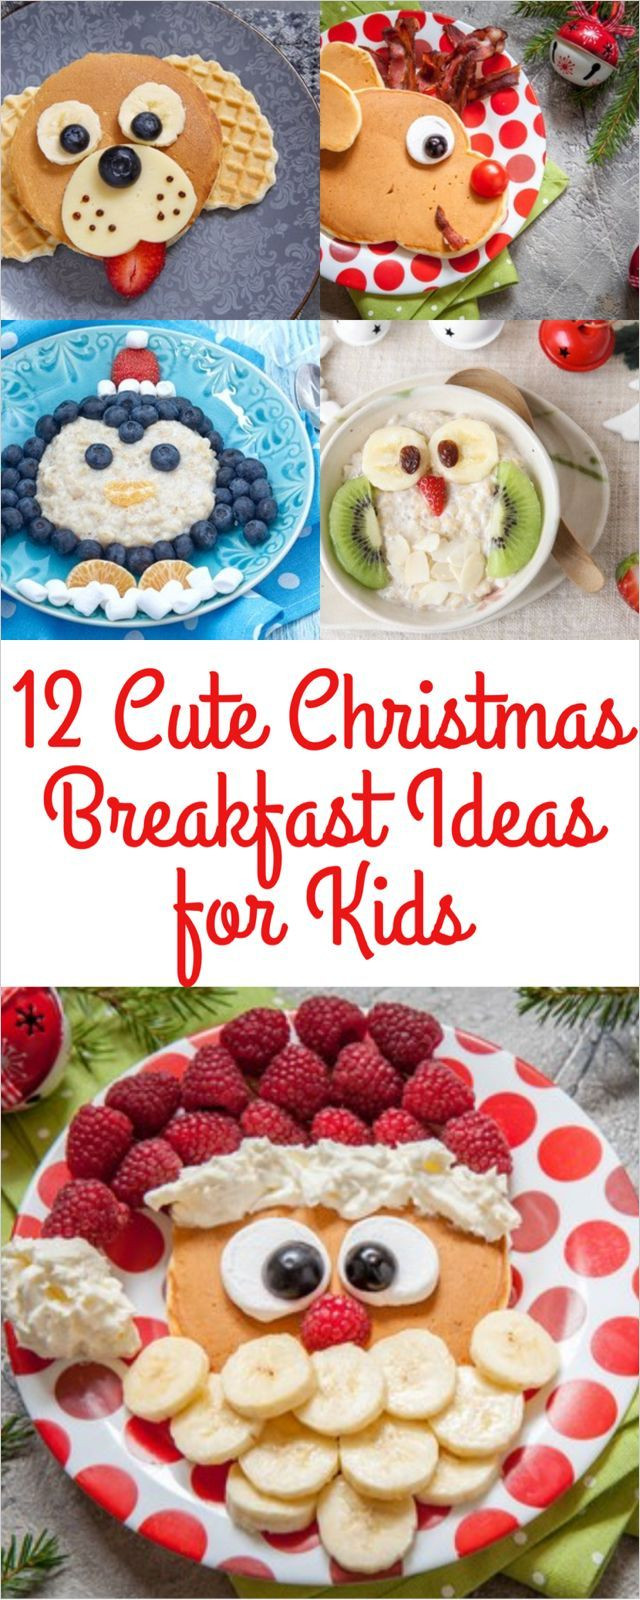 Christmas Breakfast Ideas For Kids
 Best 25 Christmas fruit ideas ideas on Pinterest